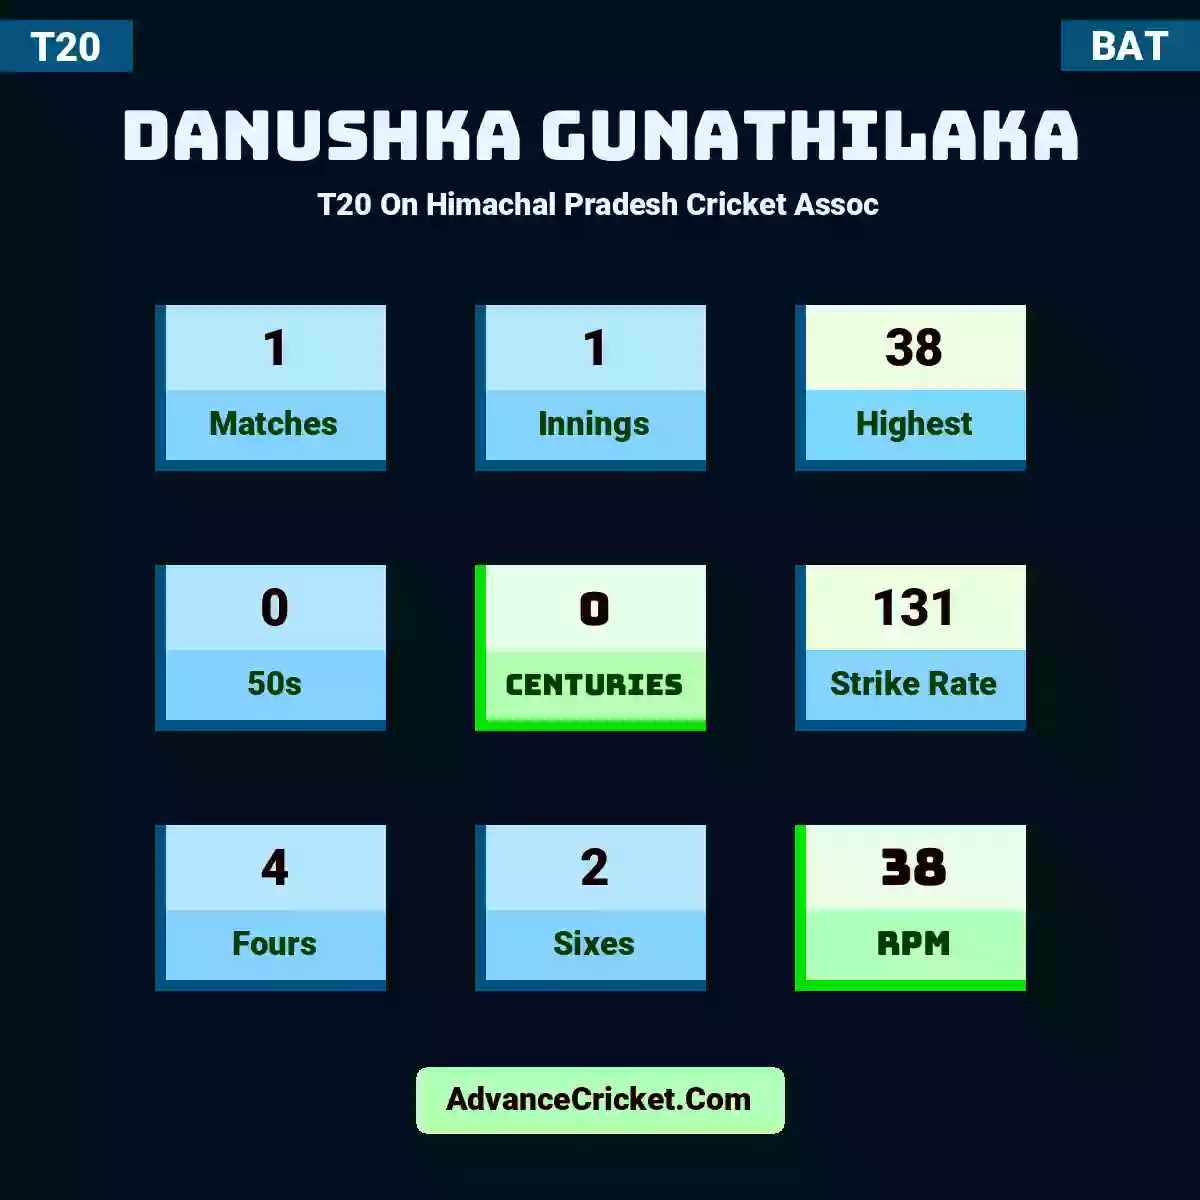 Danushka Gunathilaka T20  On Himachal Pradesh Cricket Assoc, Danushka Gunathilaka played 1 matches, scored 38 runs as highest, 0 half-centuries, and 0 centuries, with a strike rate of 131. D.Gunathilaka hit 4 fours and 2 sixes, with an RPM of 38.